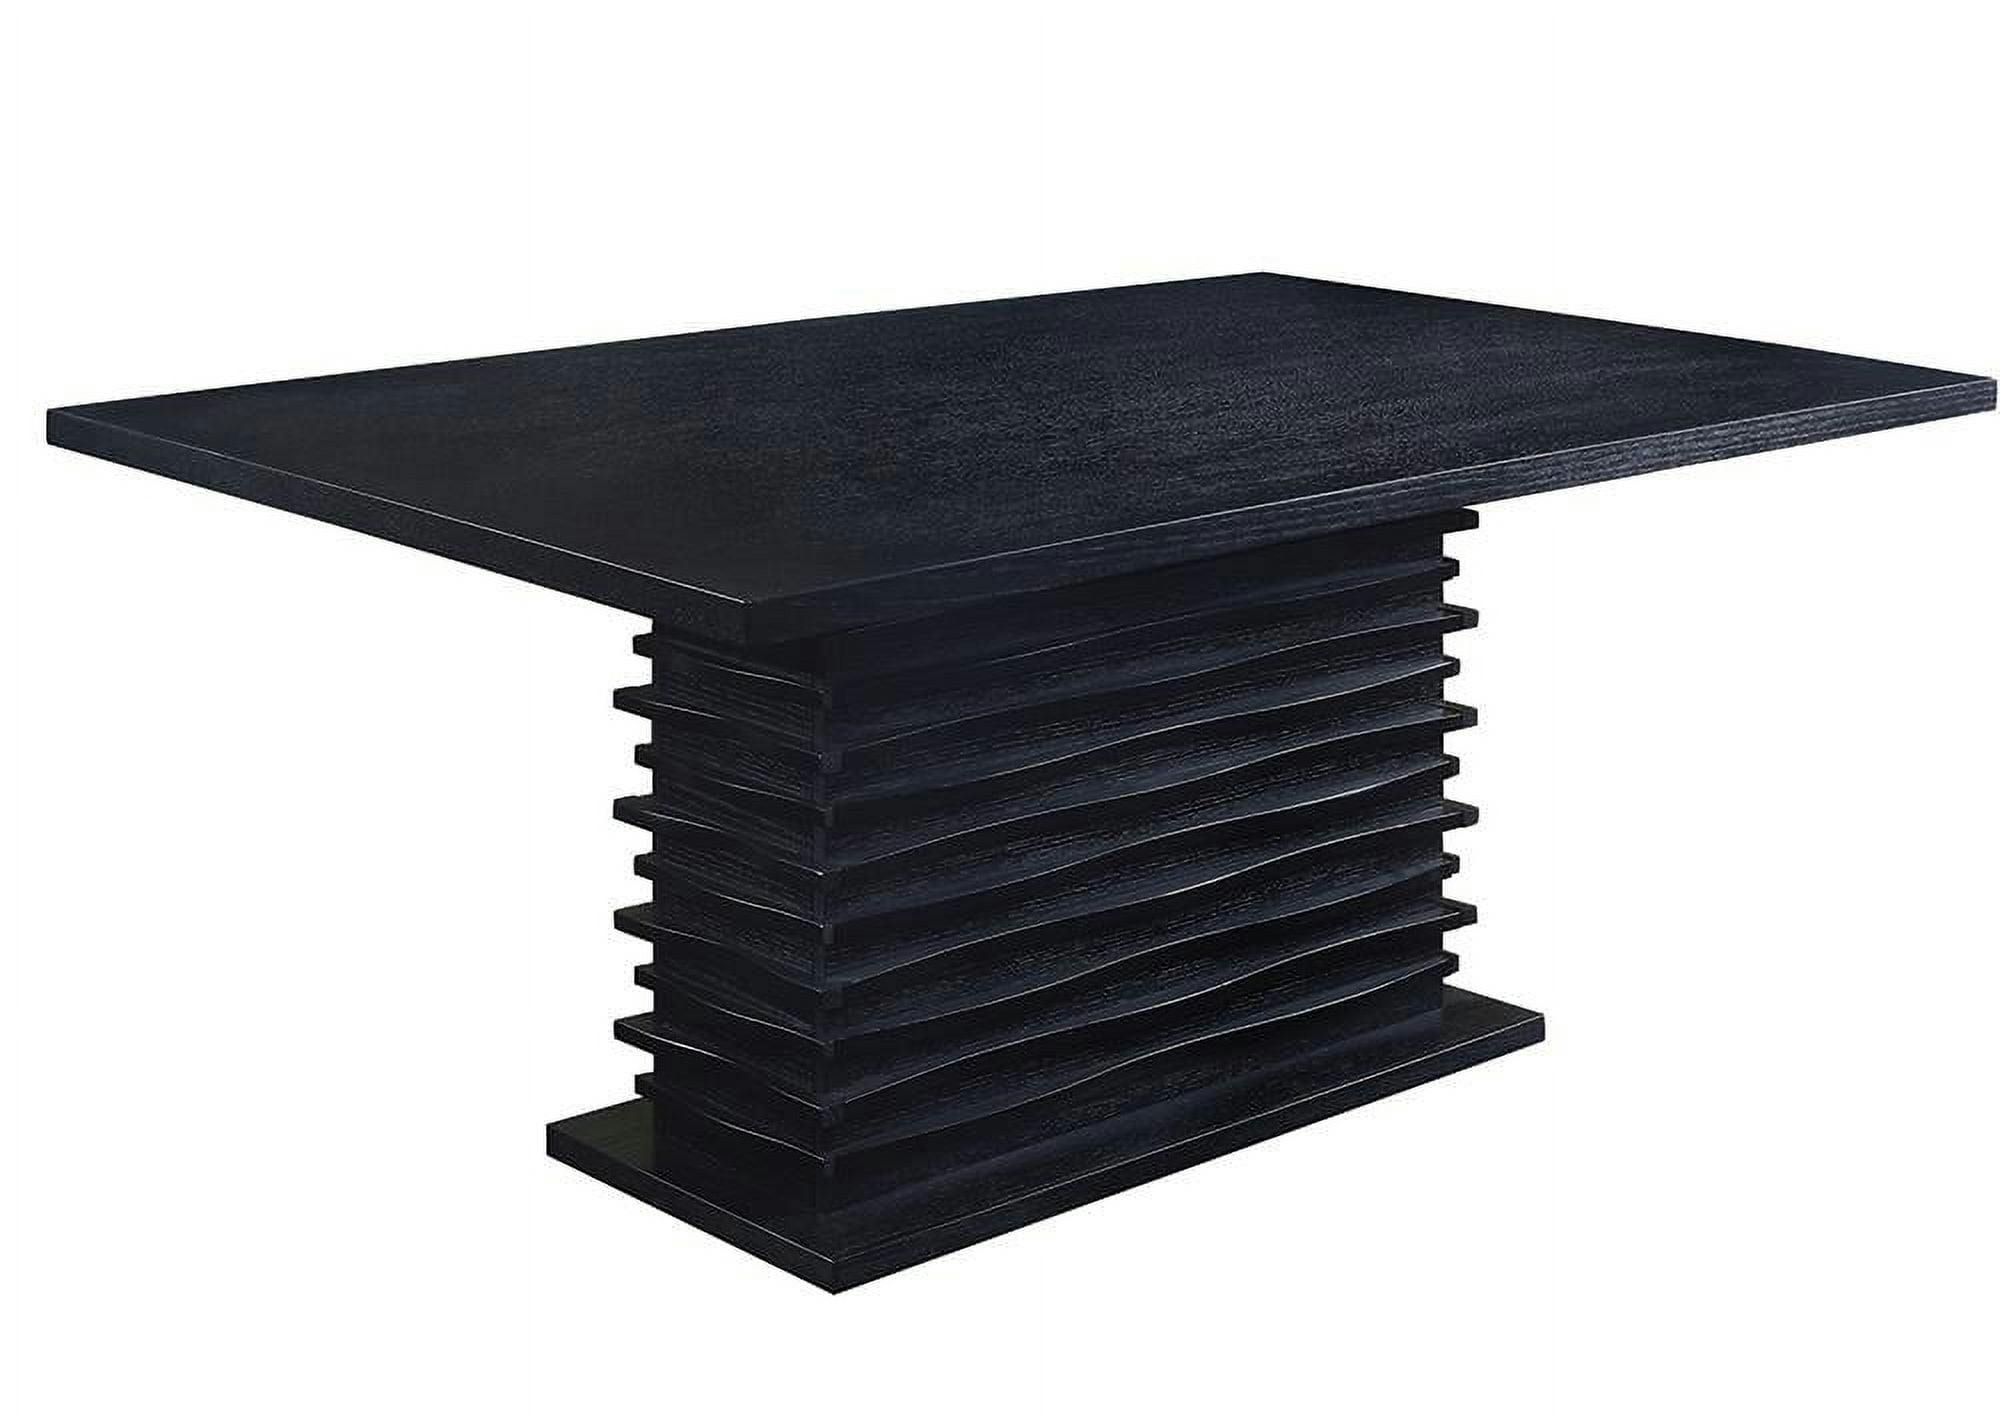 Stanton Wave Black Rectangular Dining Table with Layered Pedestal